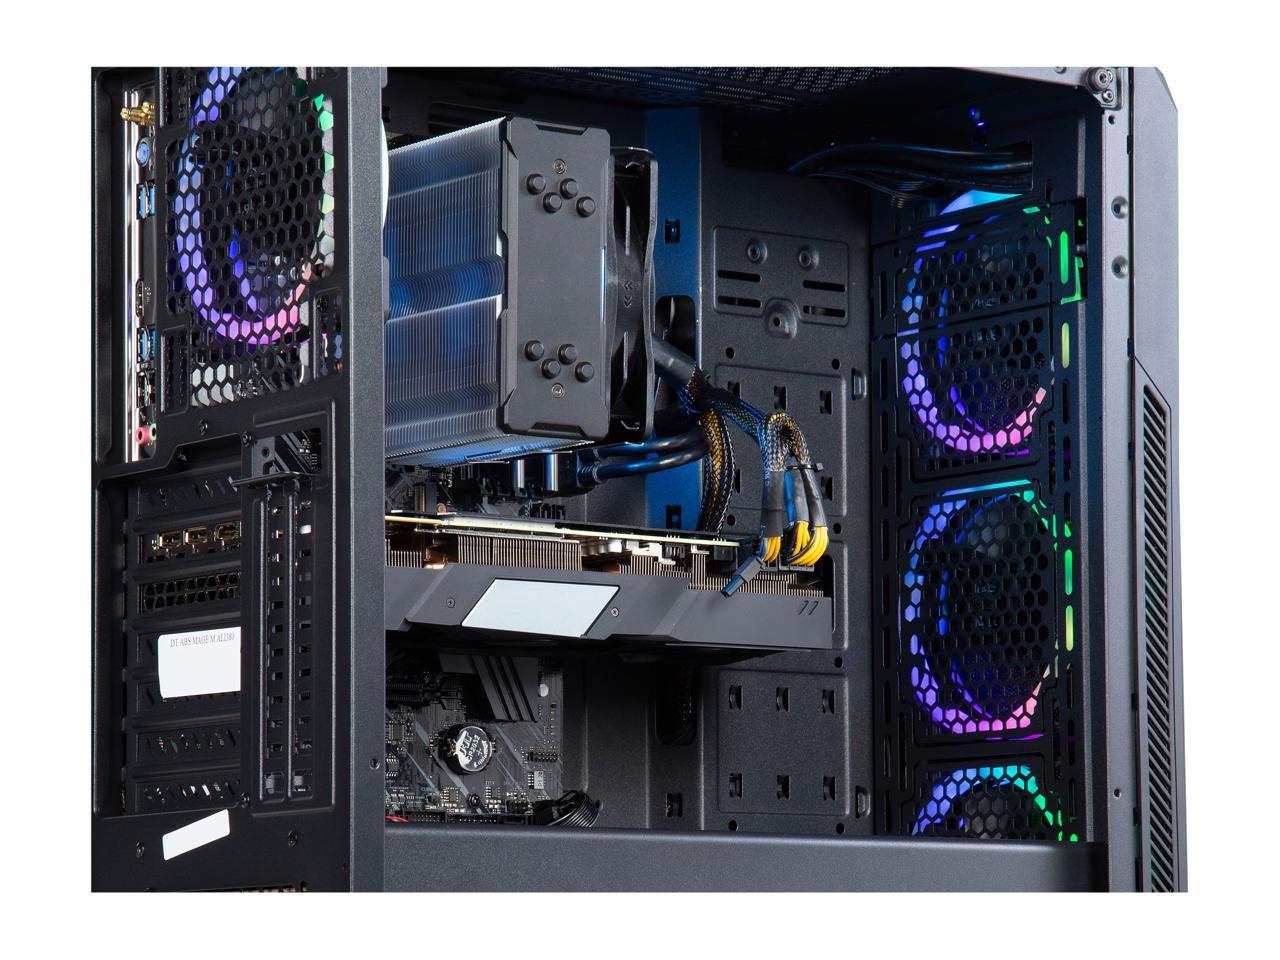 ABS Mage M - Intel i7 9700K - GeForce RTX 2070 Super - 16GB DDR4 3000MHz - 512GB SSD - Gaming Desktop PC